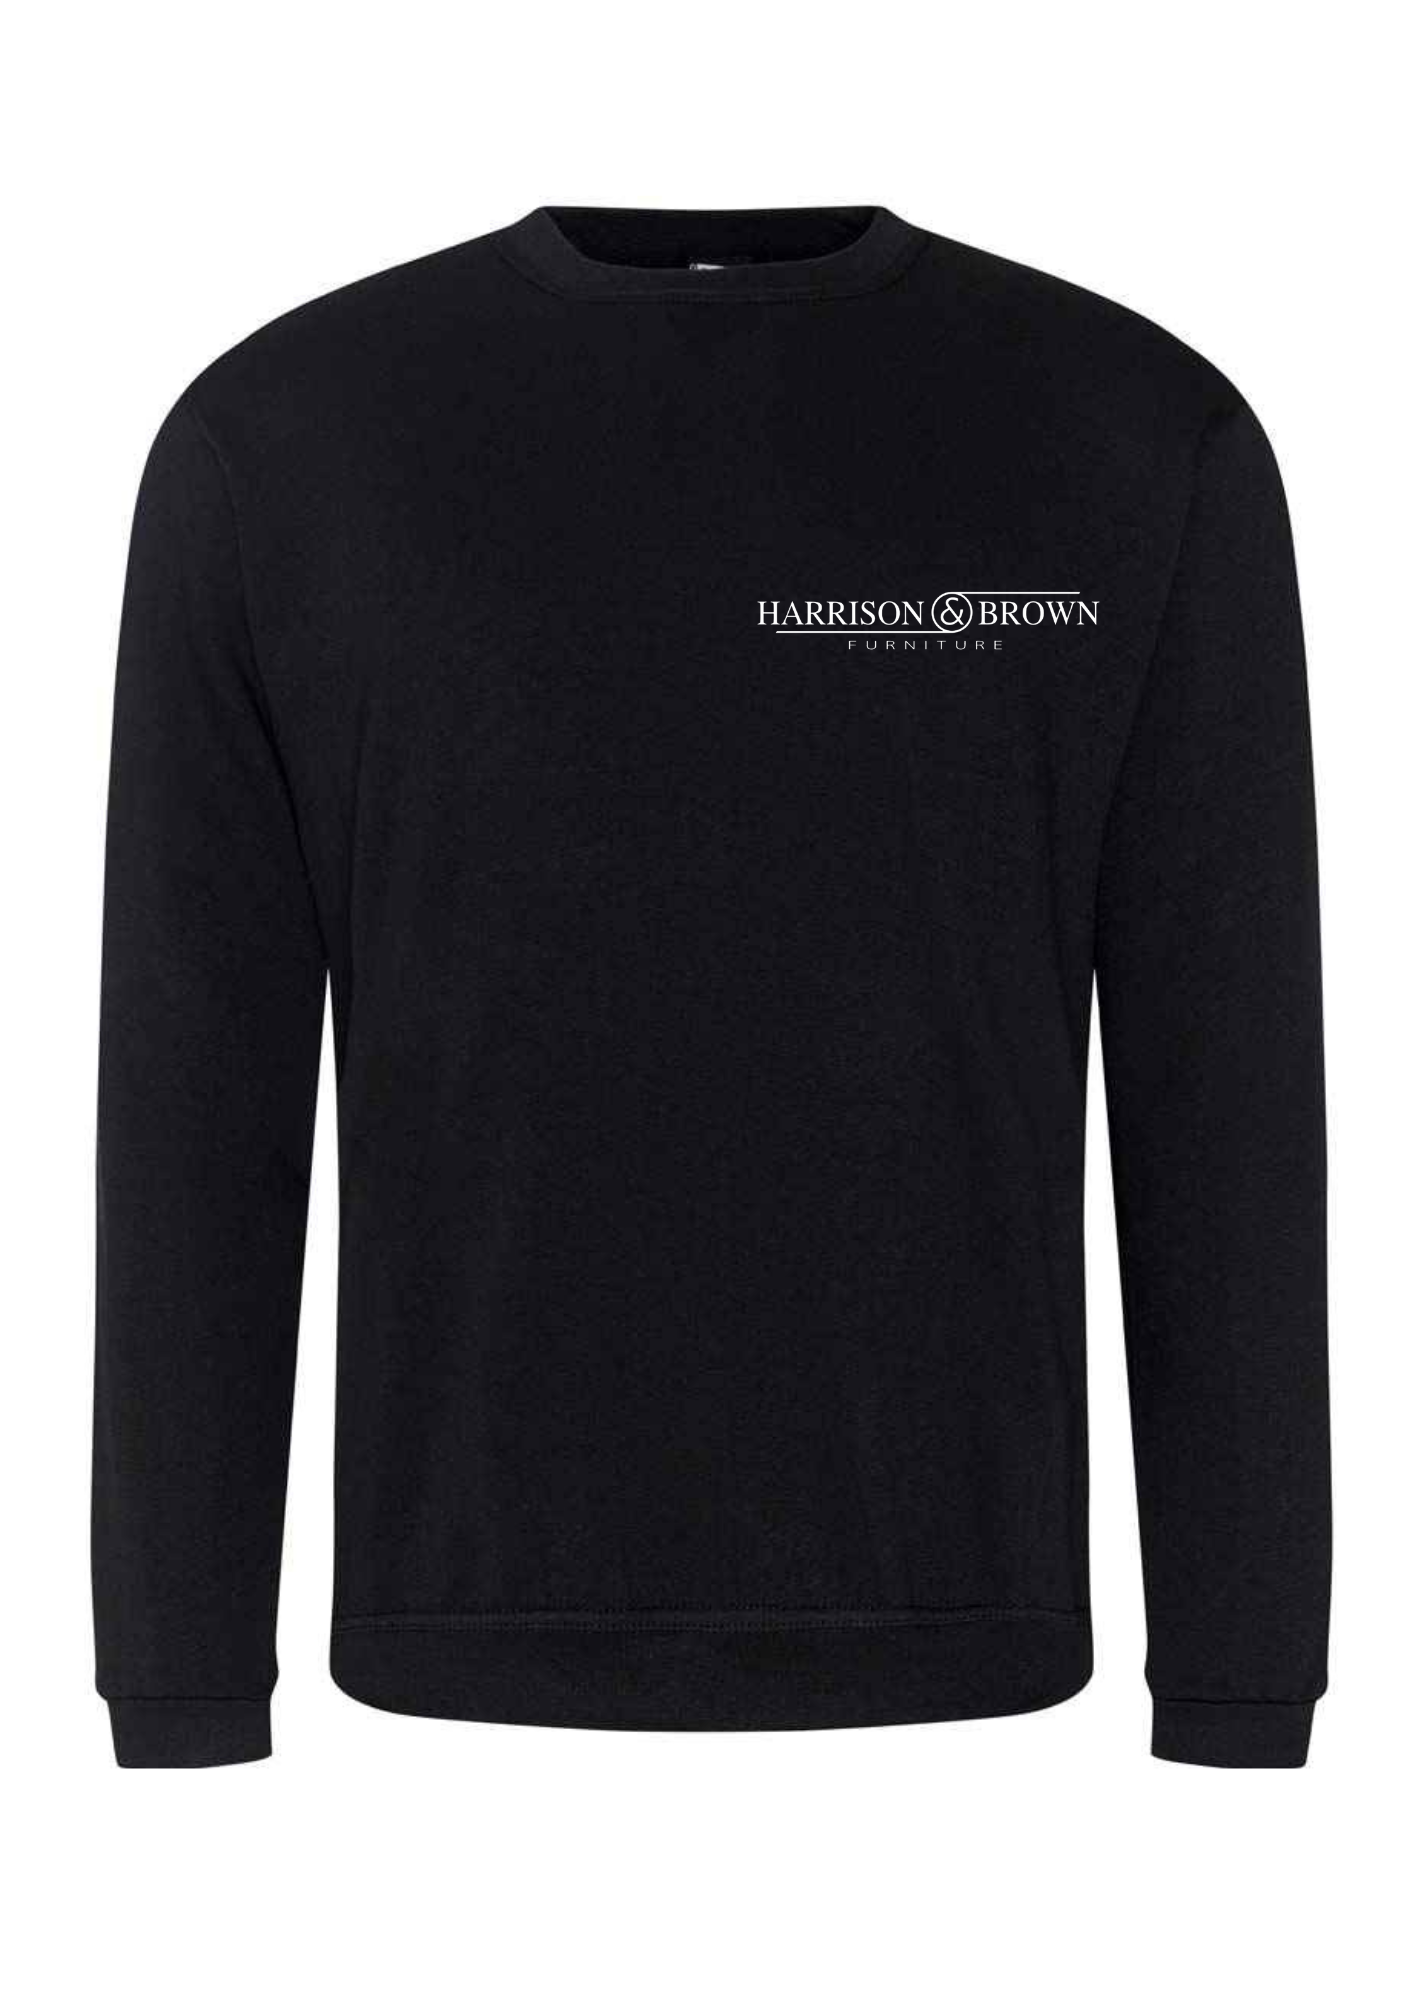 Harrison & Brown sweatshirt